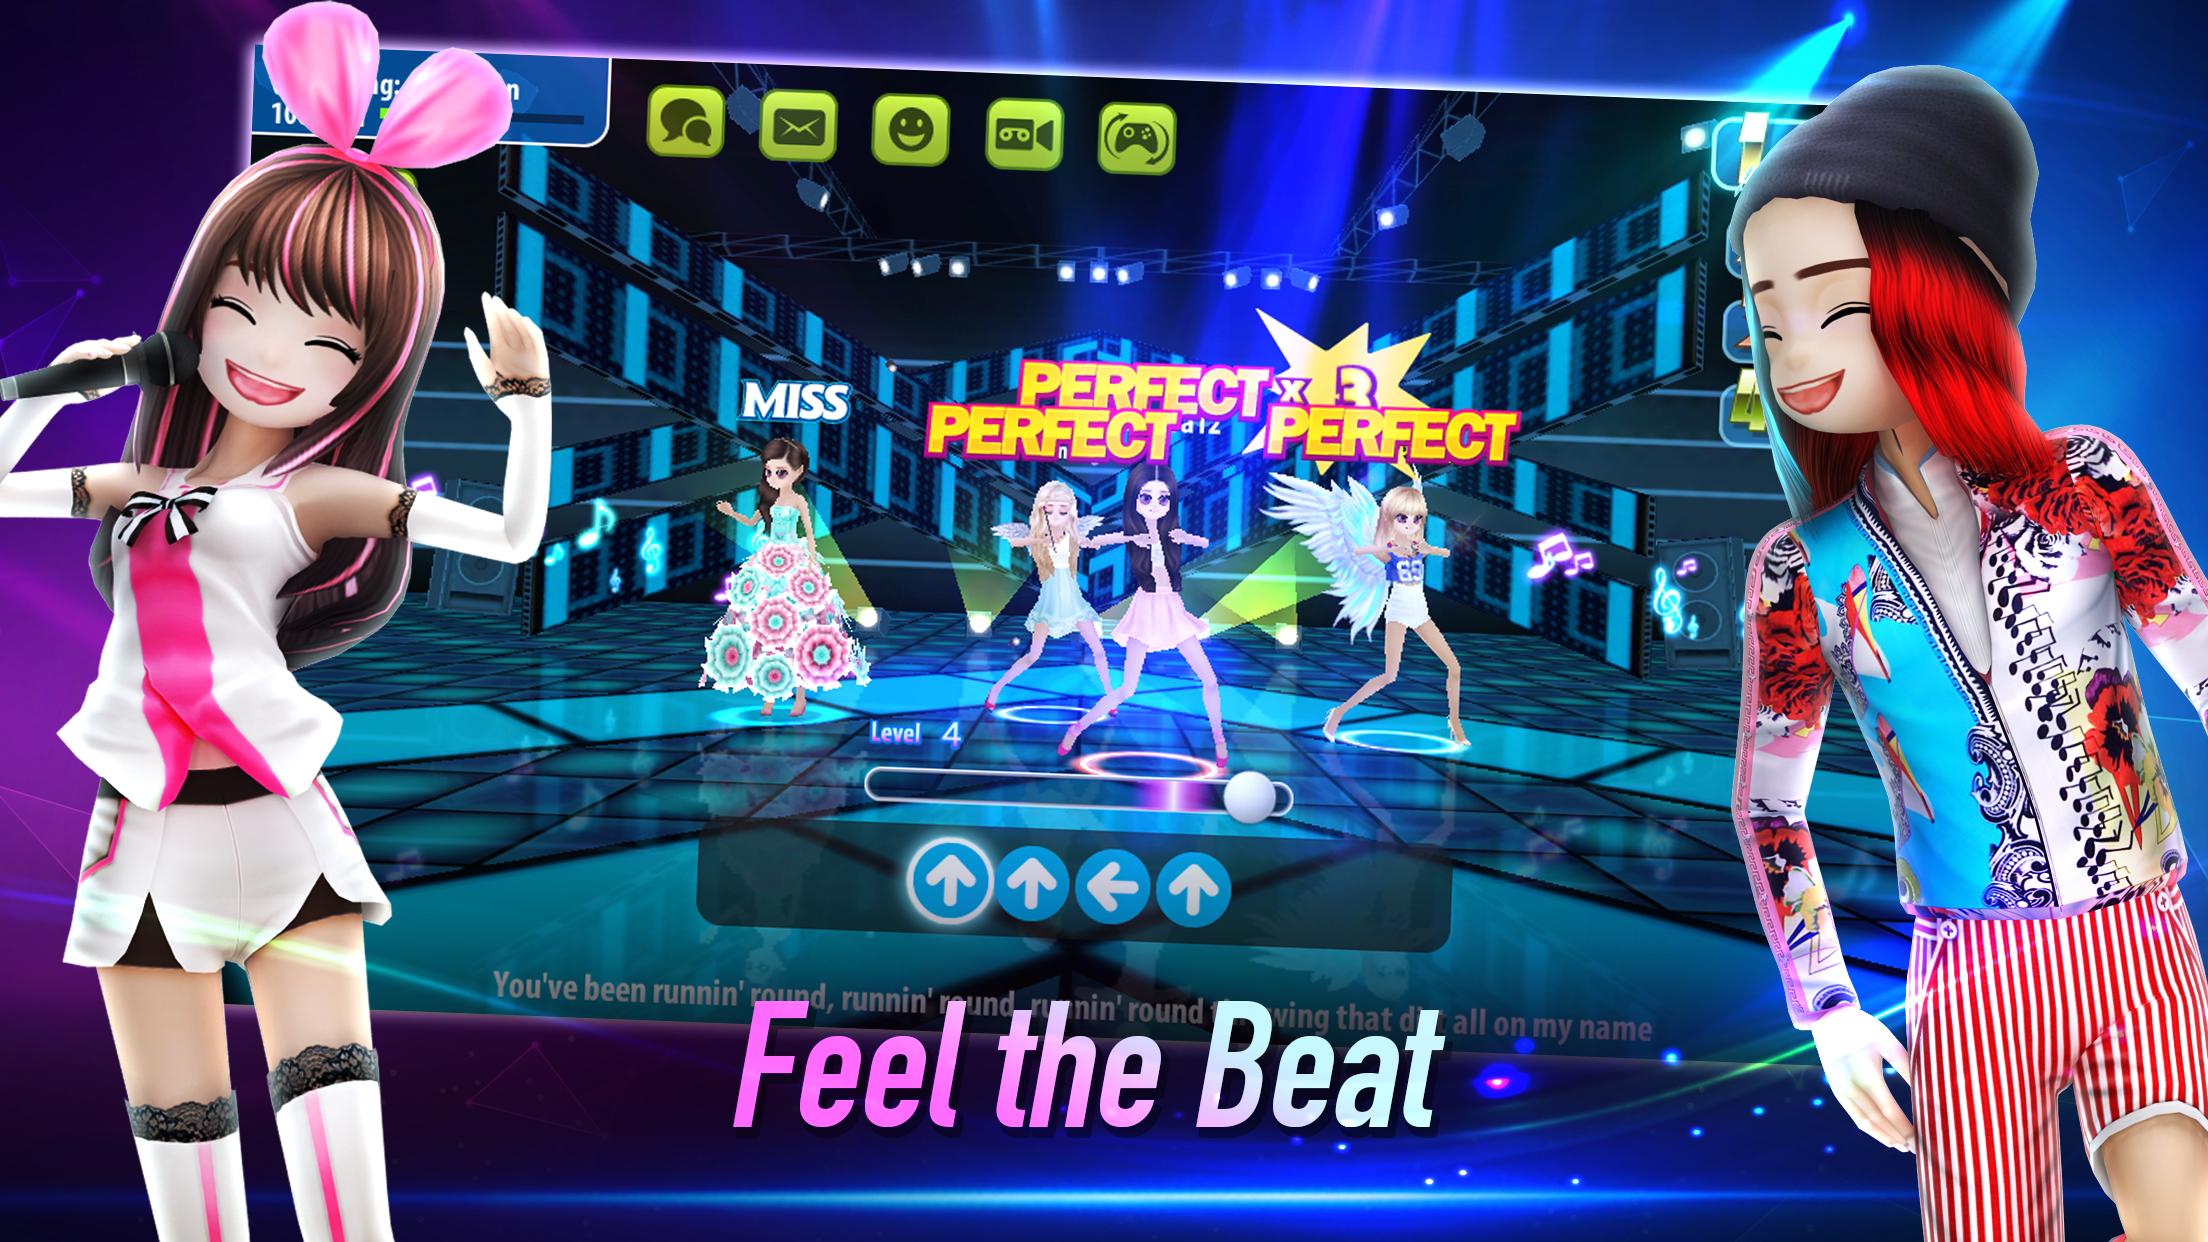 AVATAR MUSIK WORLD - Music and Dance Game 1.0.1 Screenshot 19